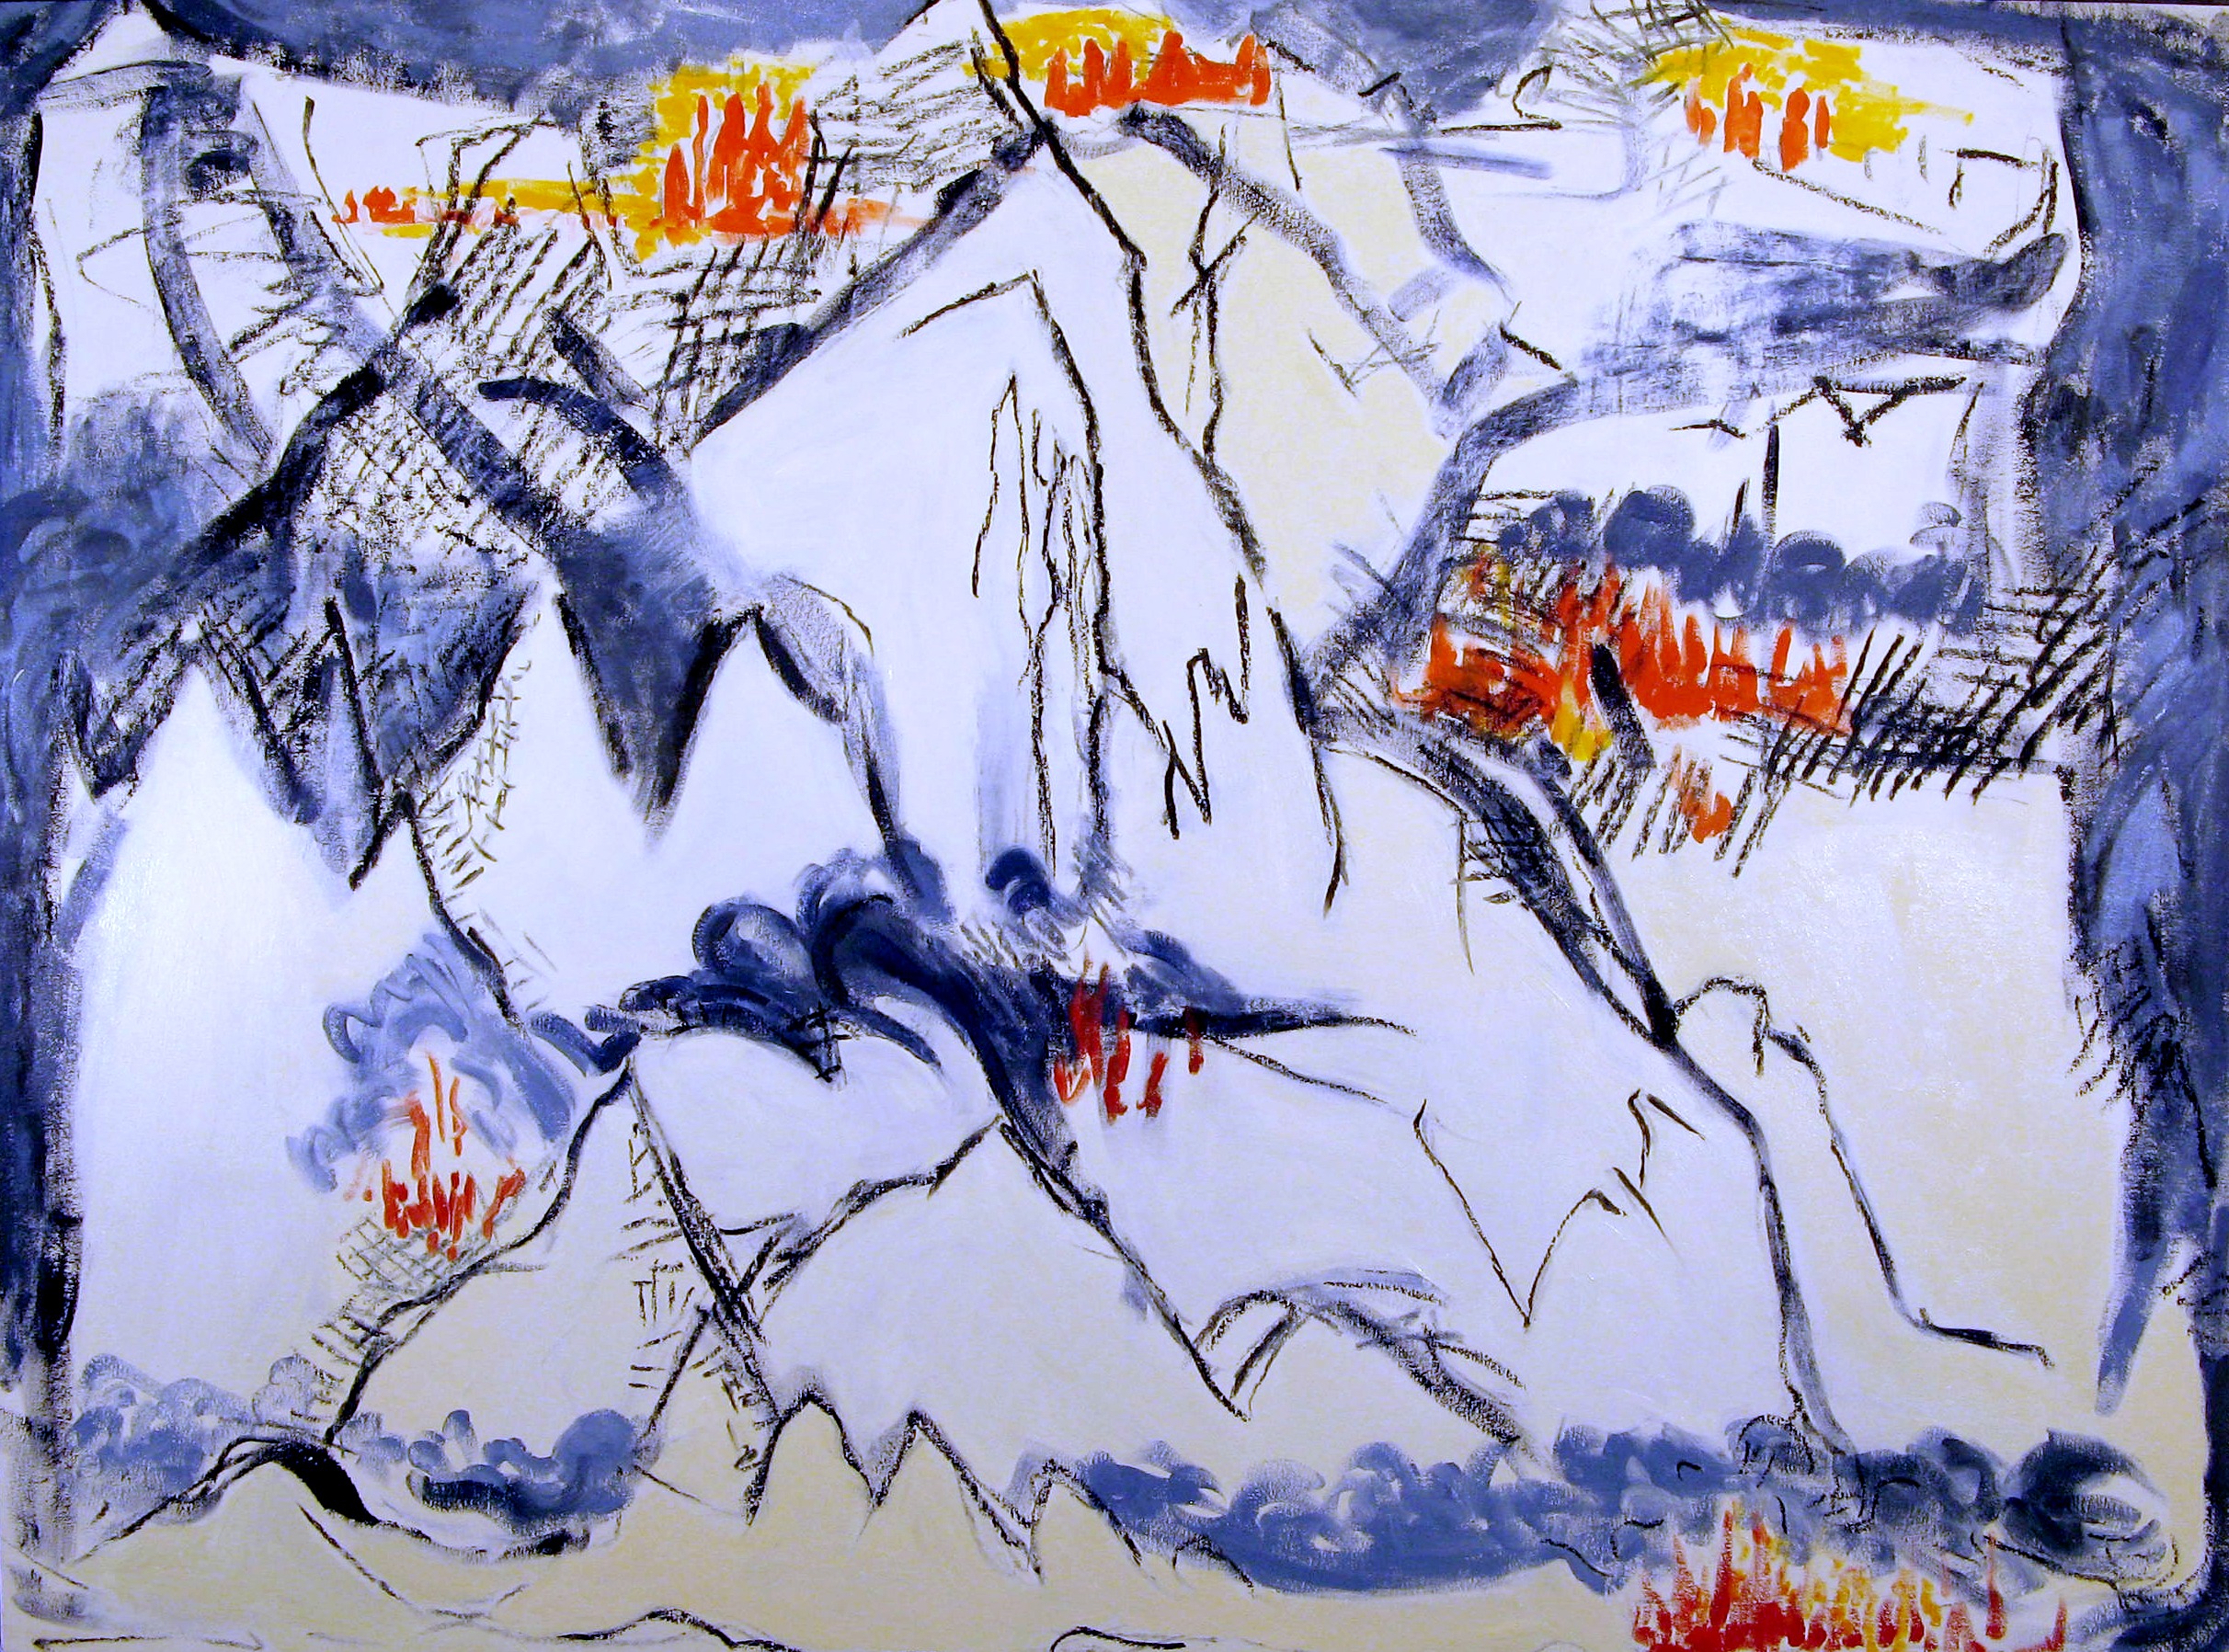  Osterman,  Cascades , Oil on canvas, 44x60 